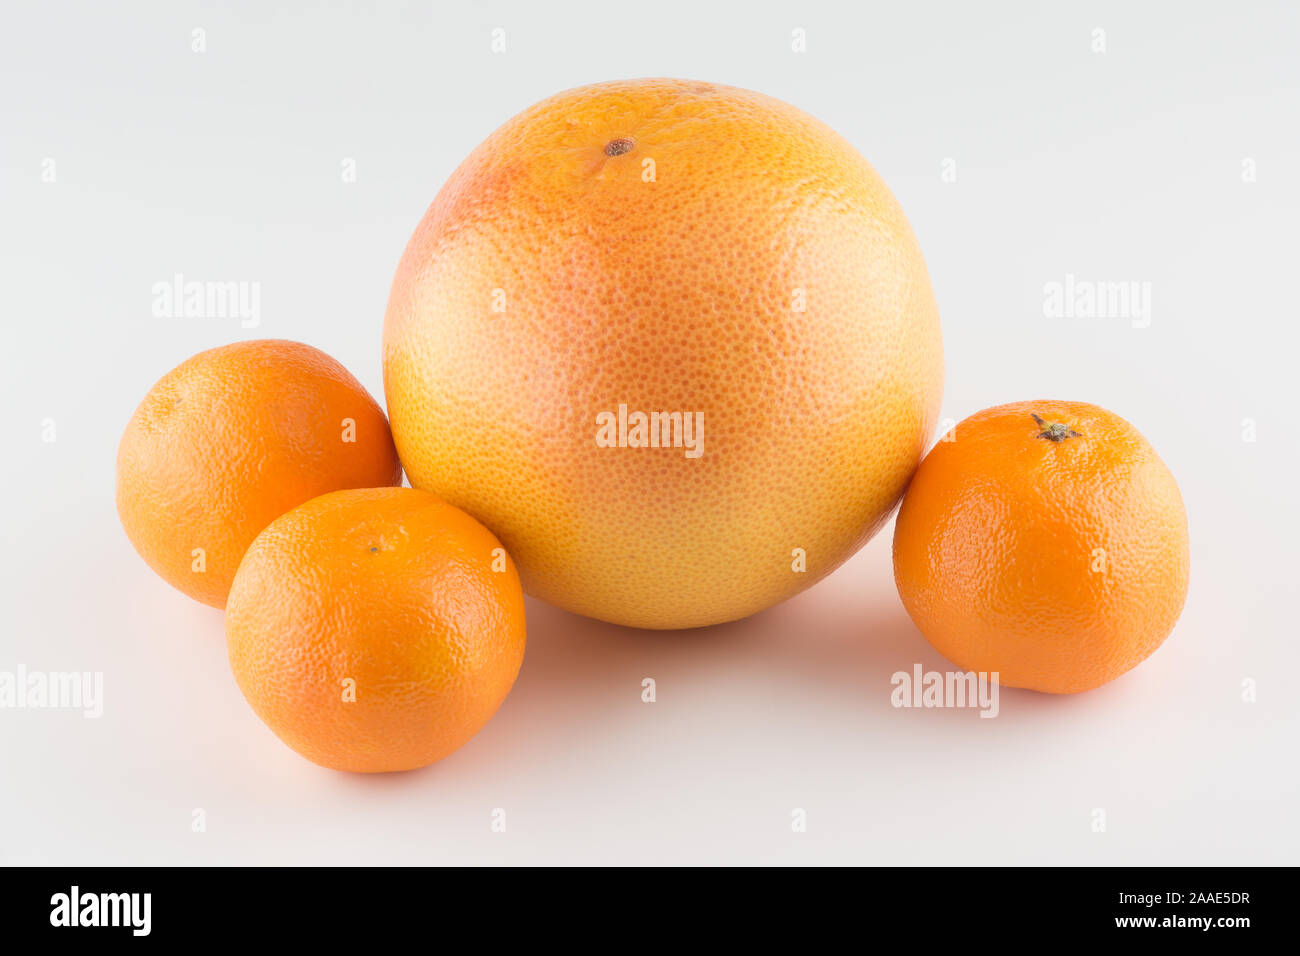 https://c8.alamy.com/comp/2AAE5DR/fresh-juicy-orange-and-mandarin-isolated-on-white-background-2AAE5DR.jpg